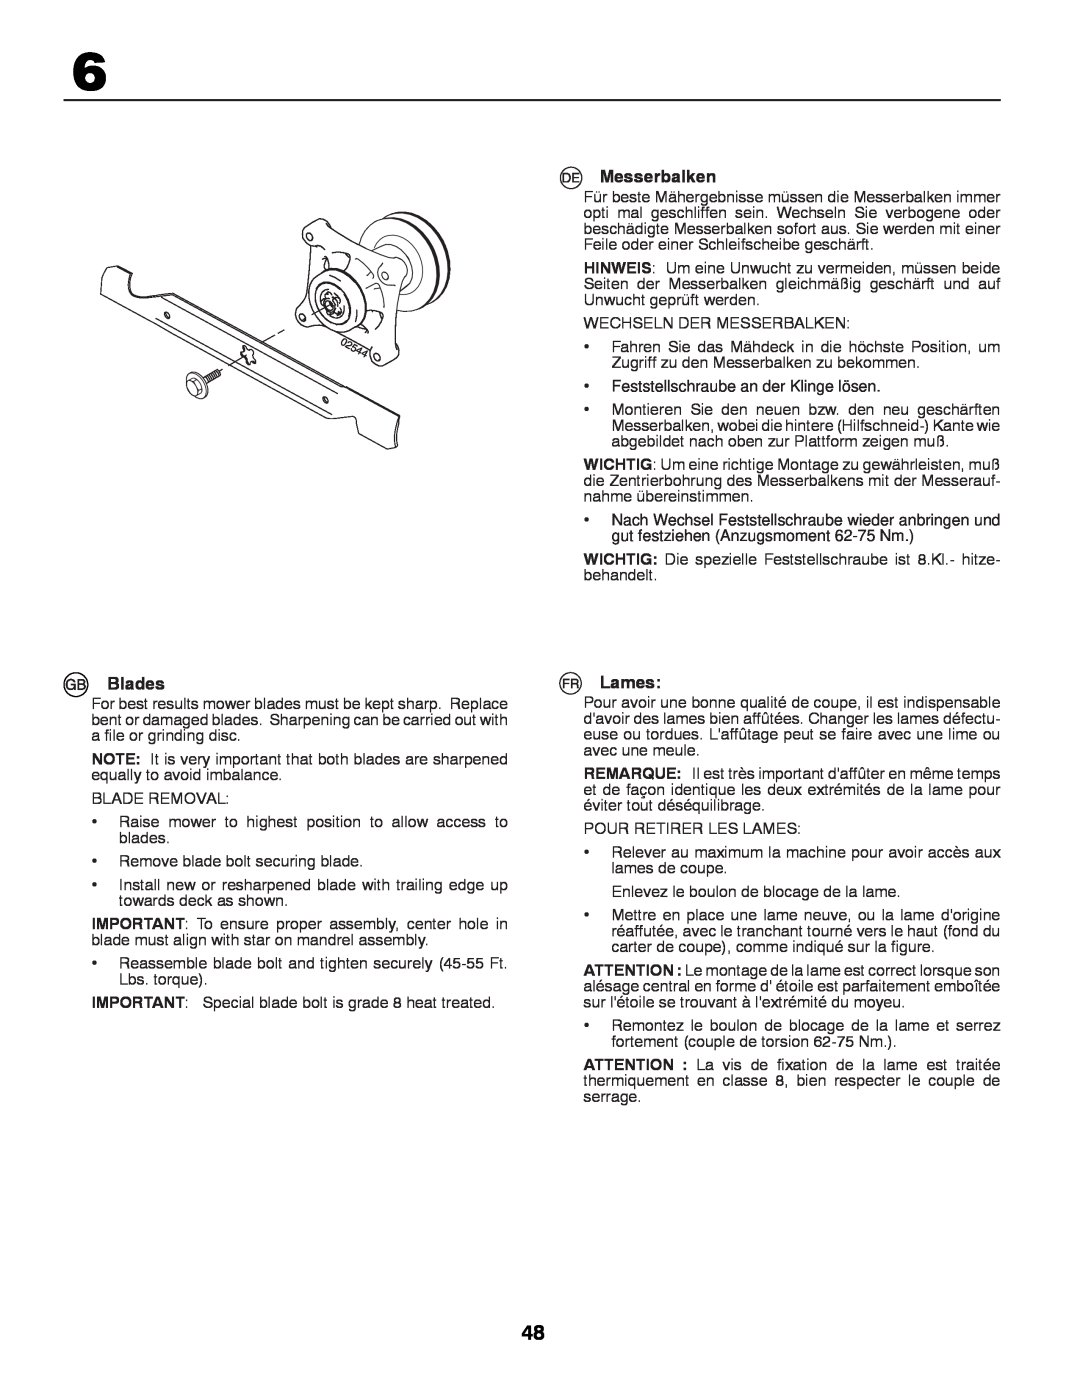 Husqvarna LT131 instruction manual Blades, Messerbalken, Lames, Feststellschraube an der Klinge lösen 